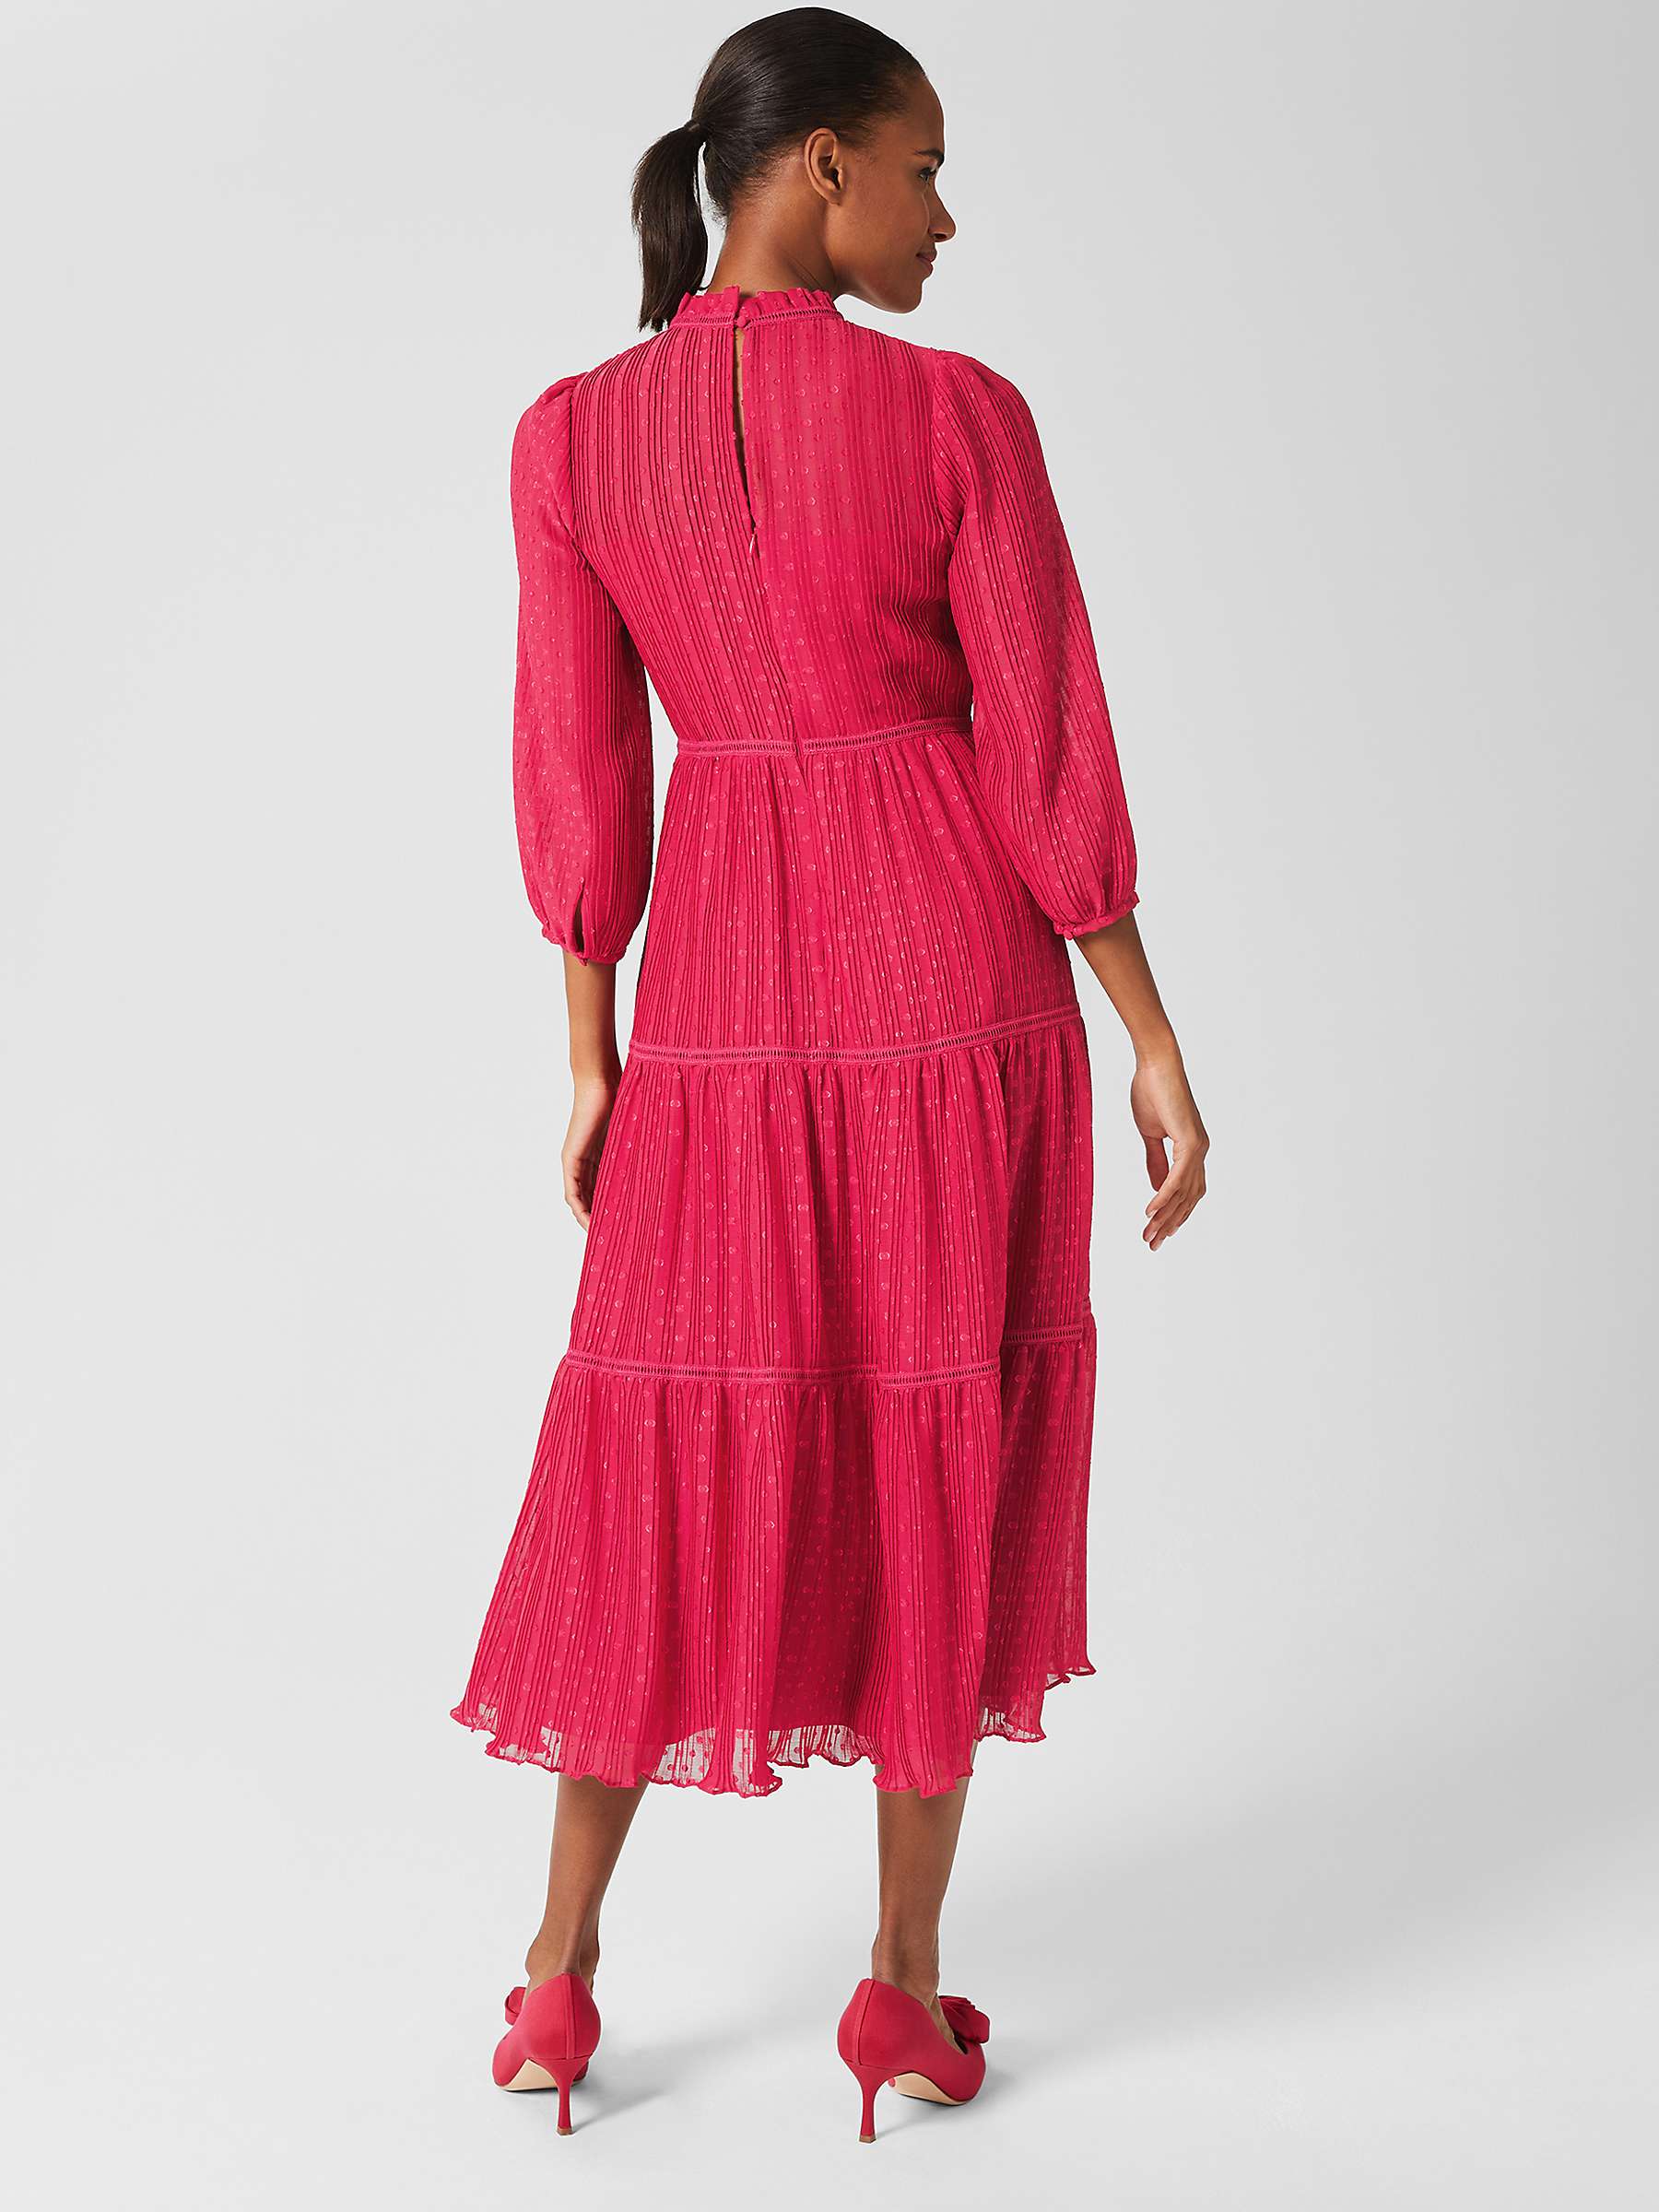 Hobbs Colette Textured Midi Dress, Cerise Pink at John Lewis & Partners